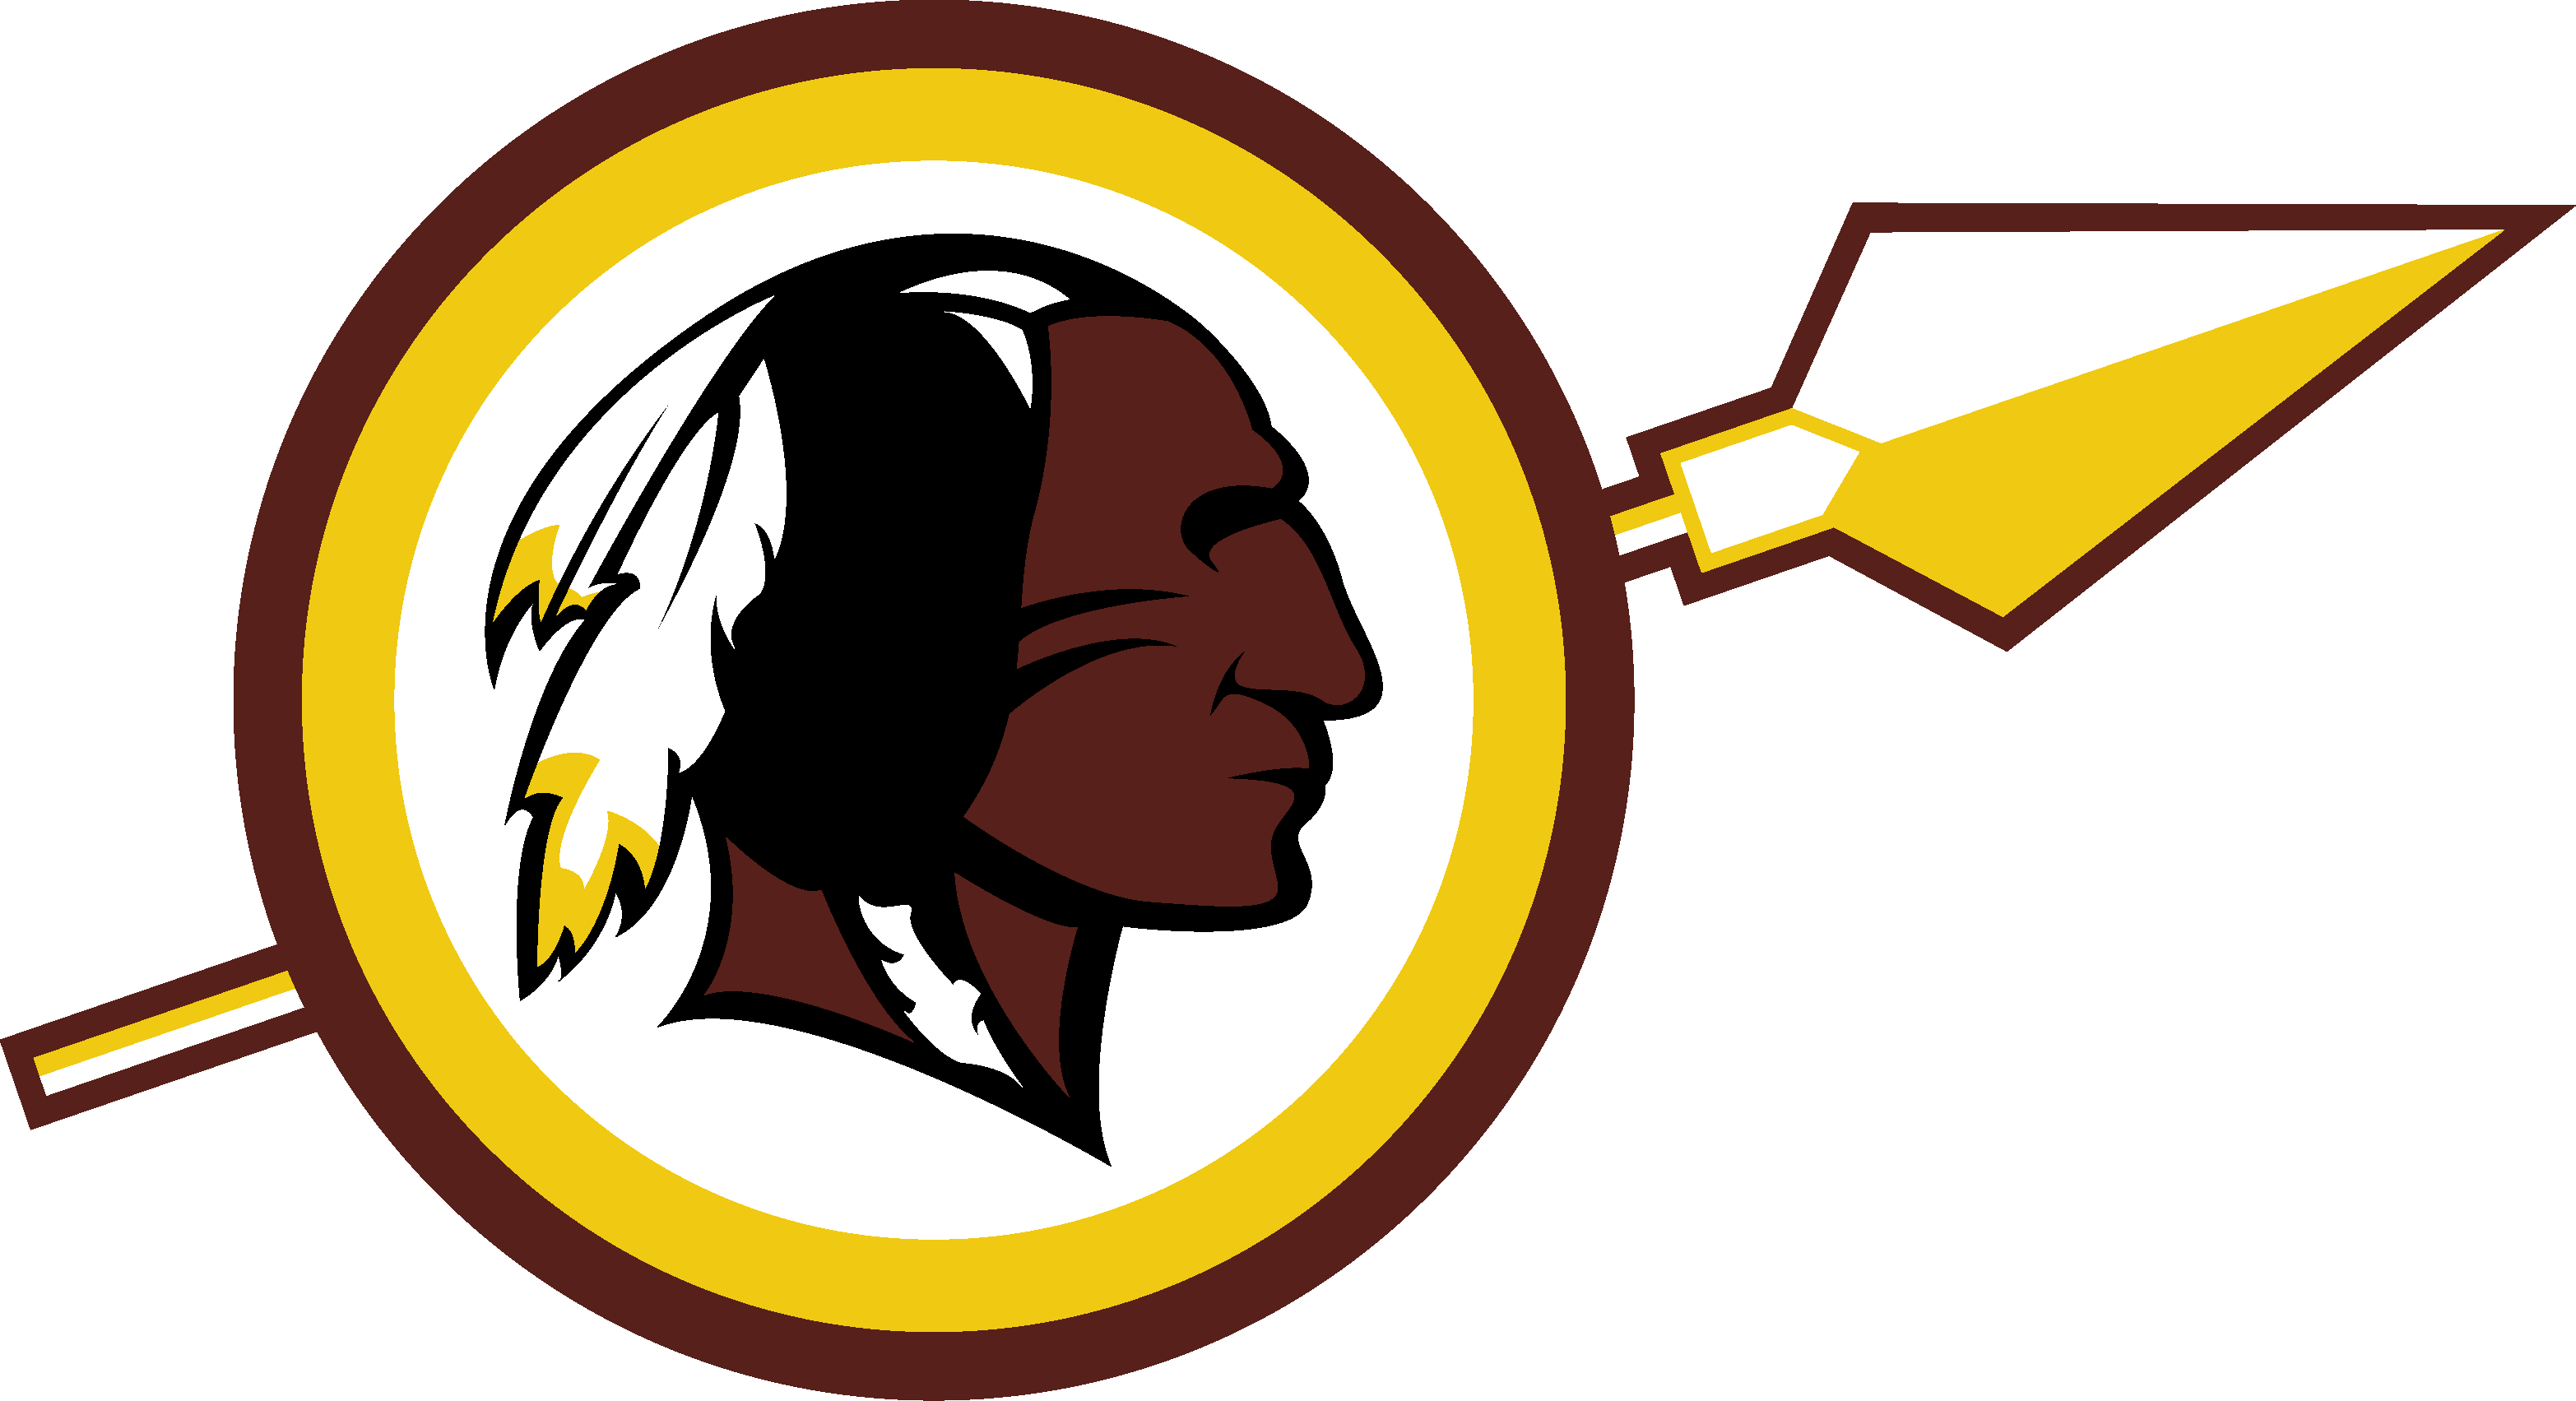 Redskins New Logo - New Washington Redskins logo Creamer's Sports